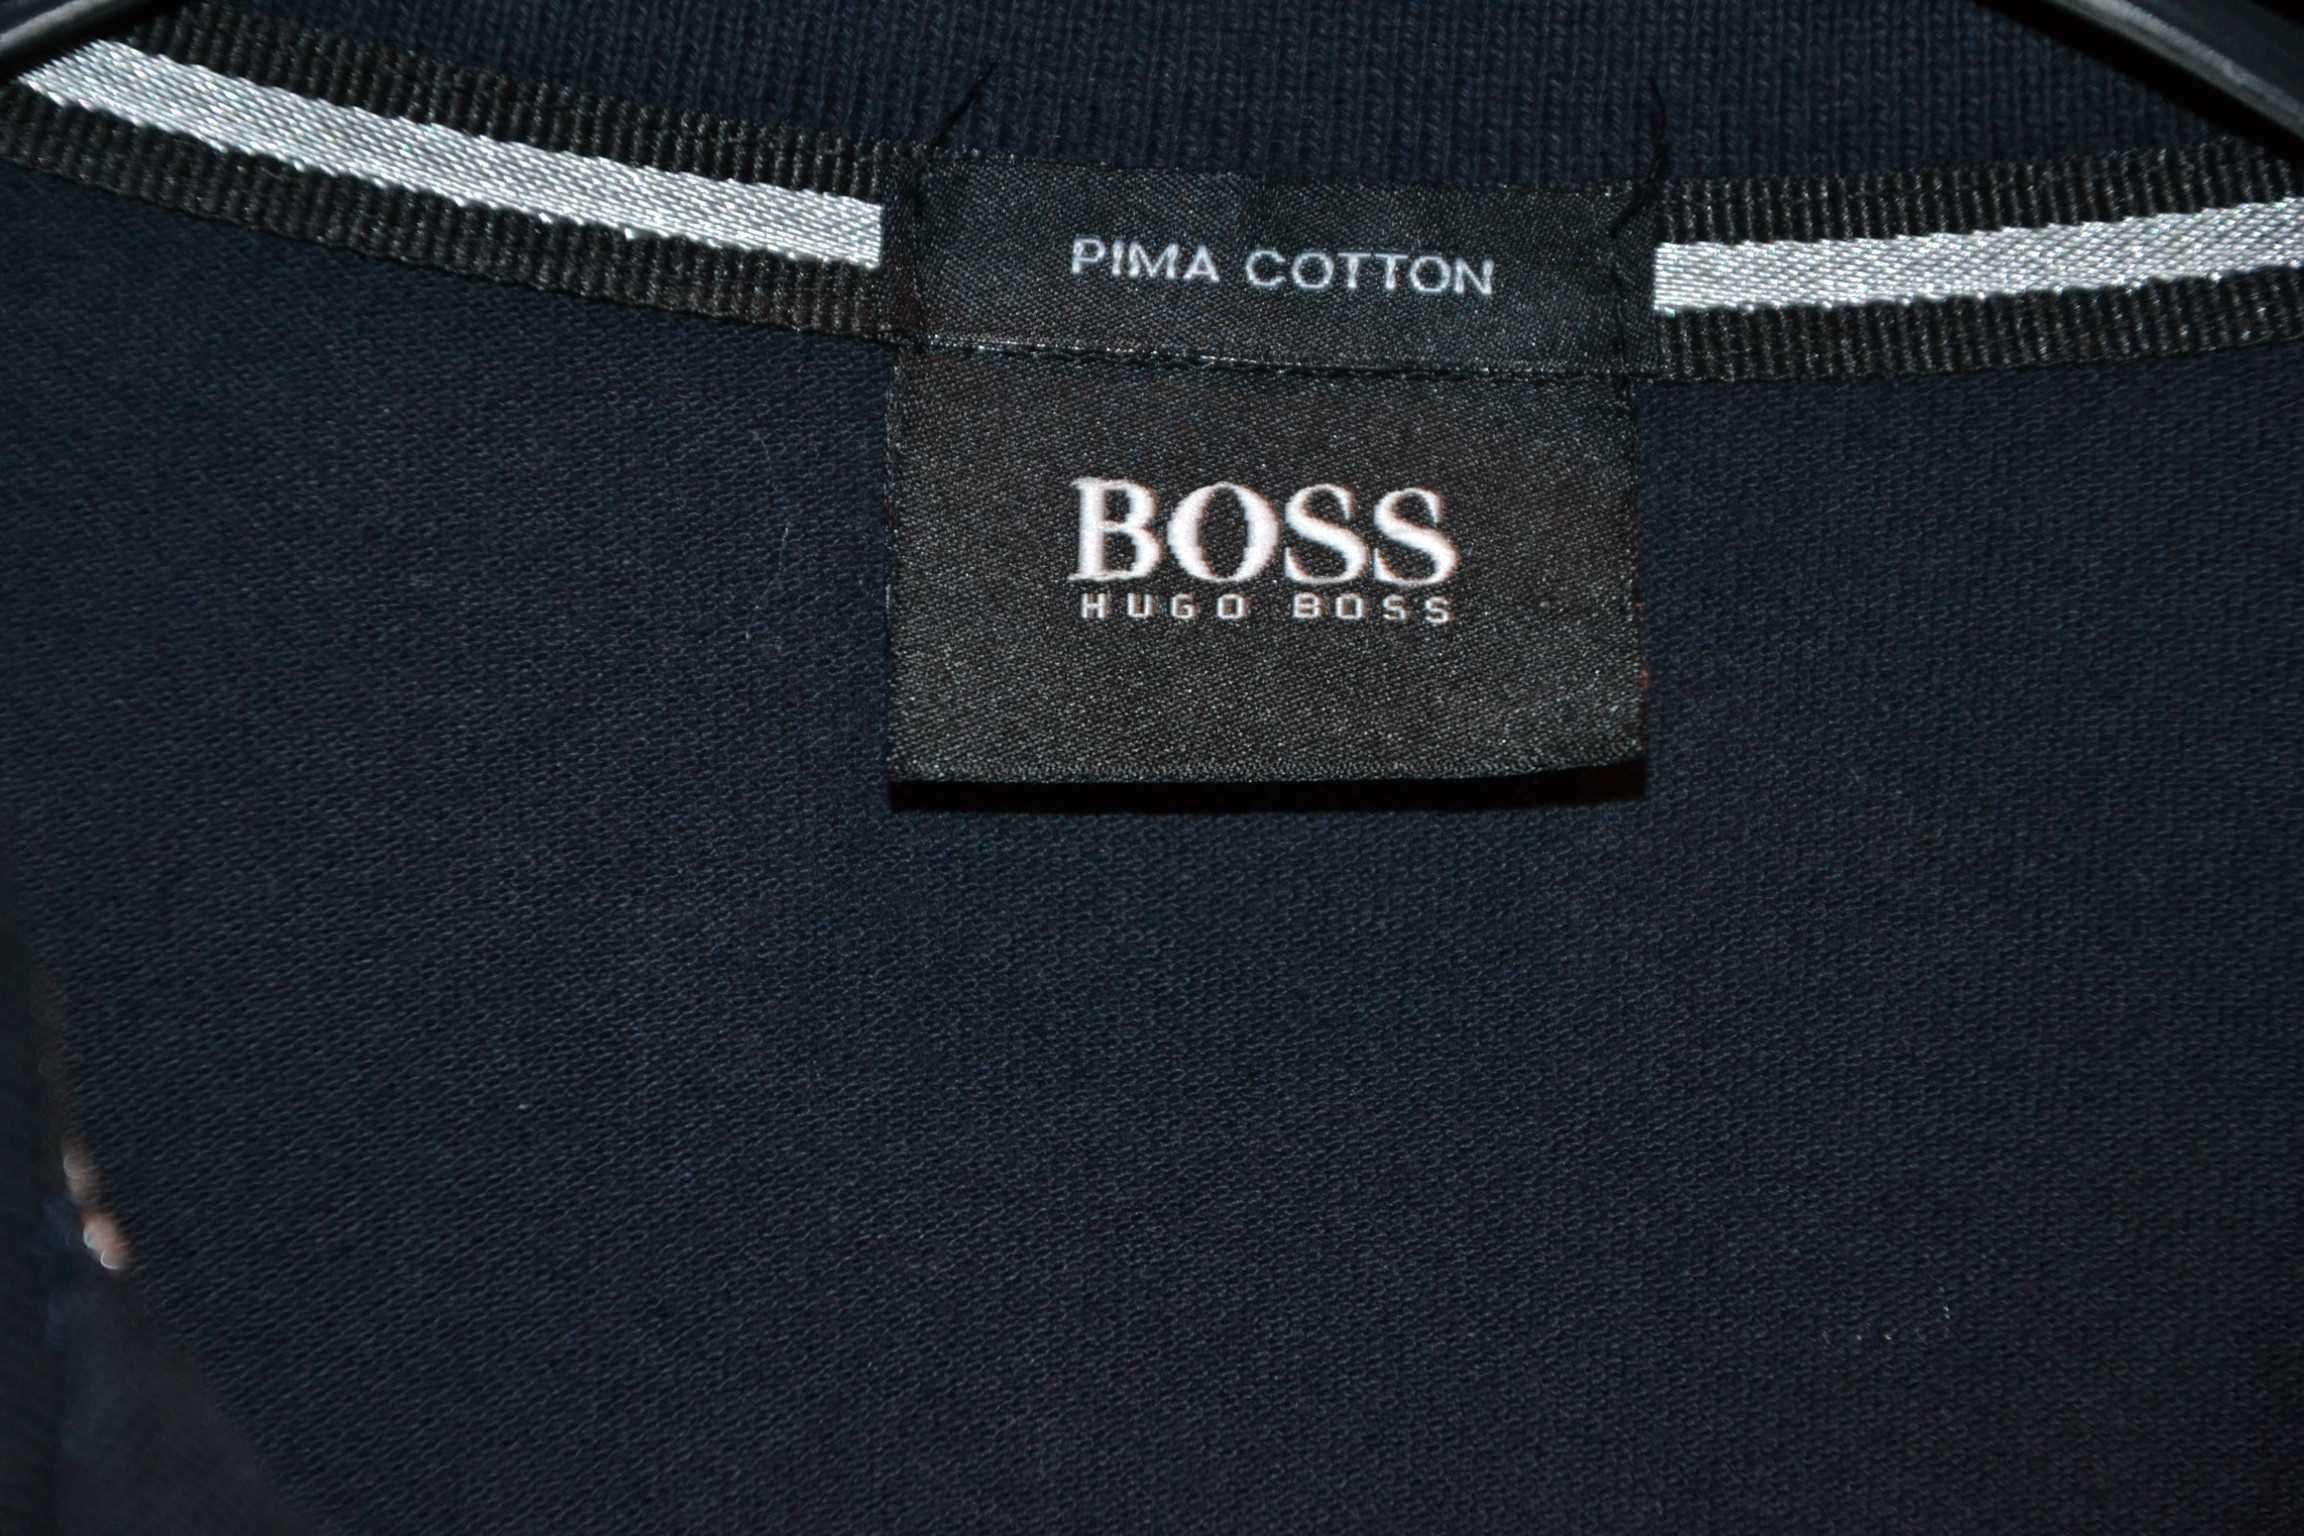 HUGO BOSS Koszulka Polo Męska M Bawełna 100% Super Stan Prima Cotton